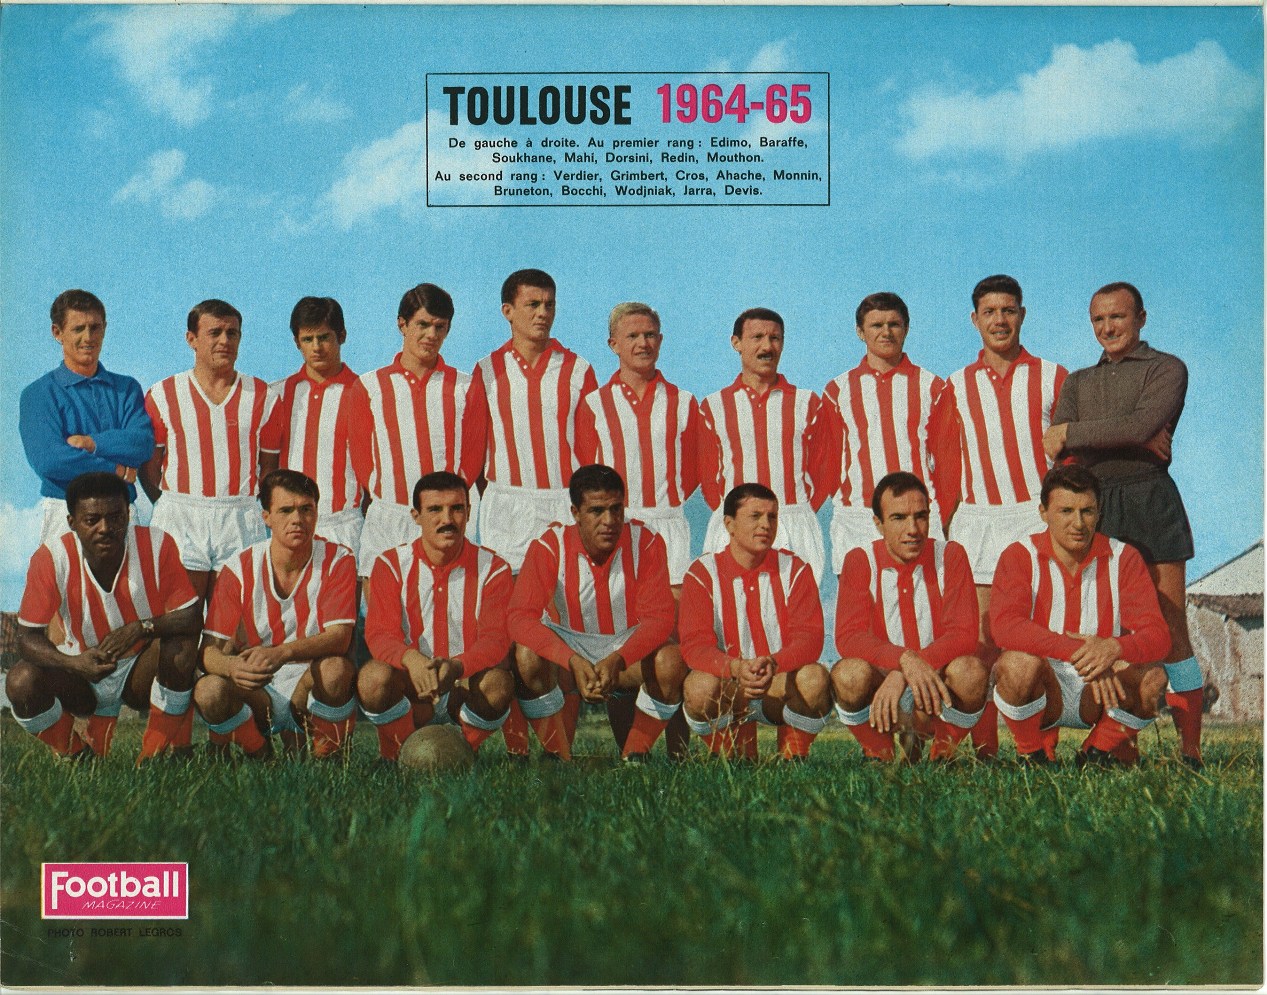 Toulouse 1964-65.jpg